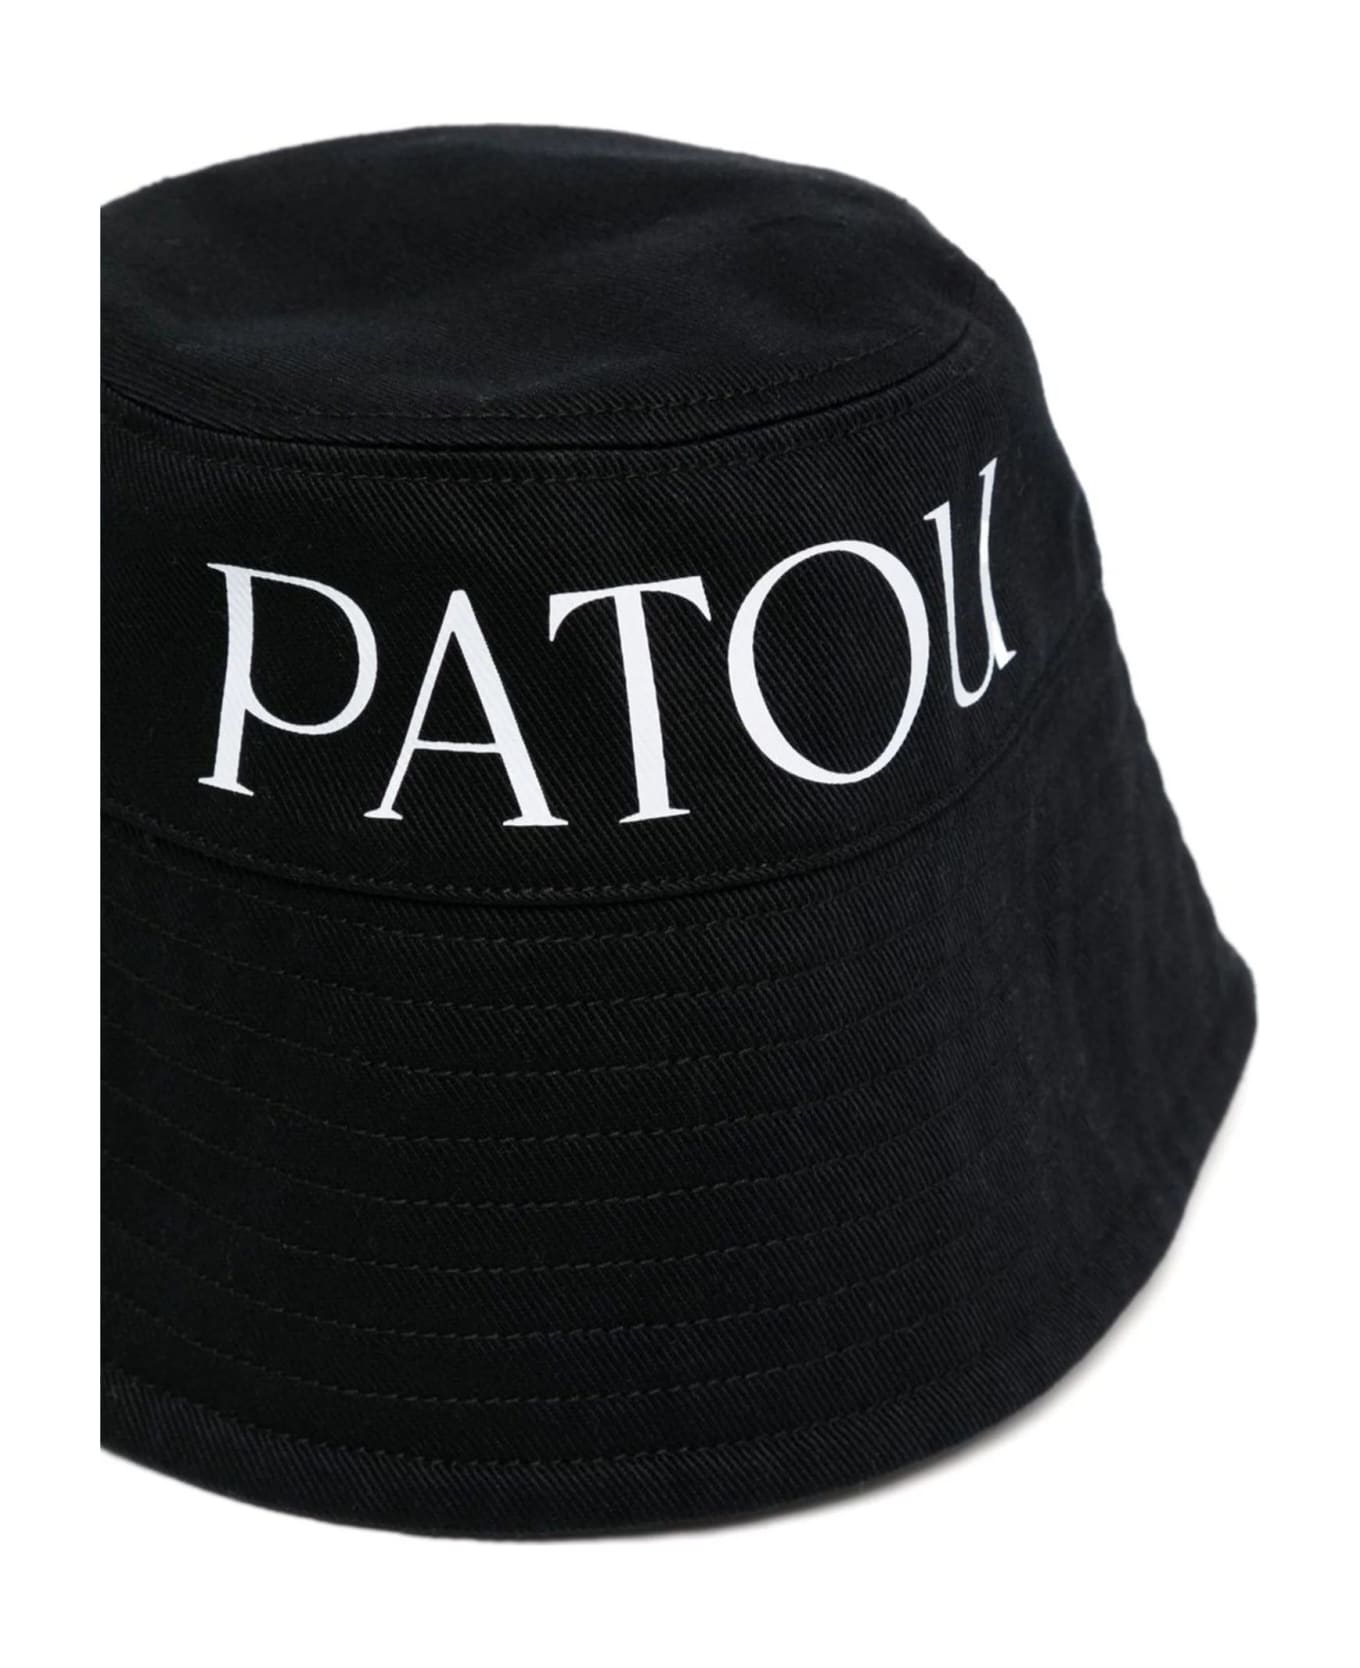 Patou Black Cotton Bucket Hat - Black